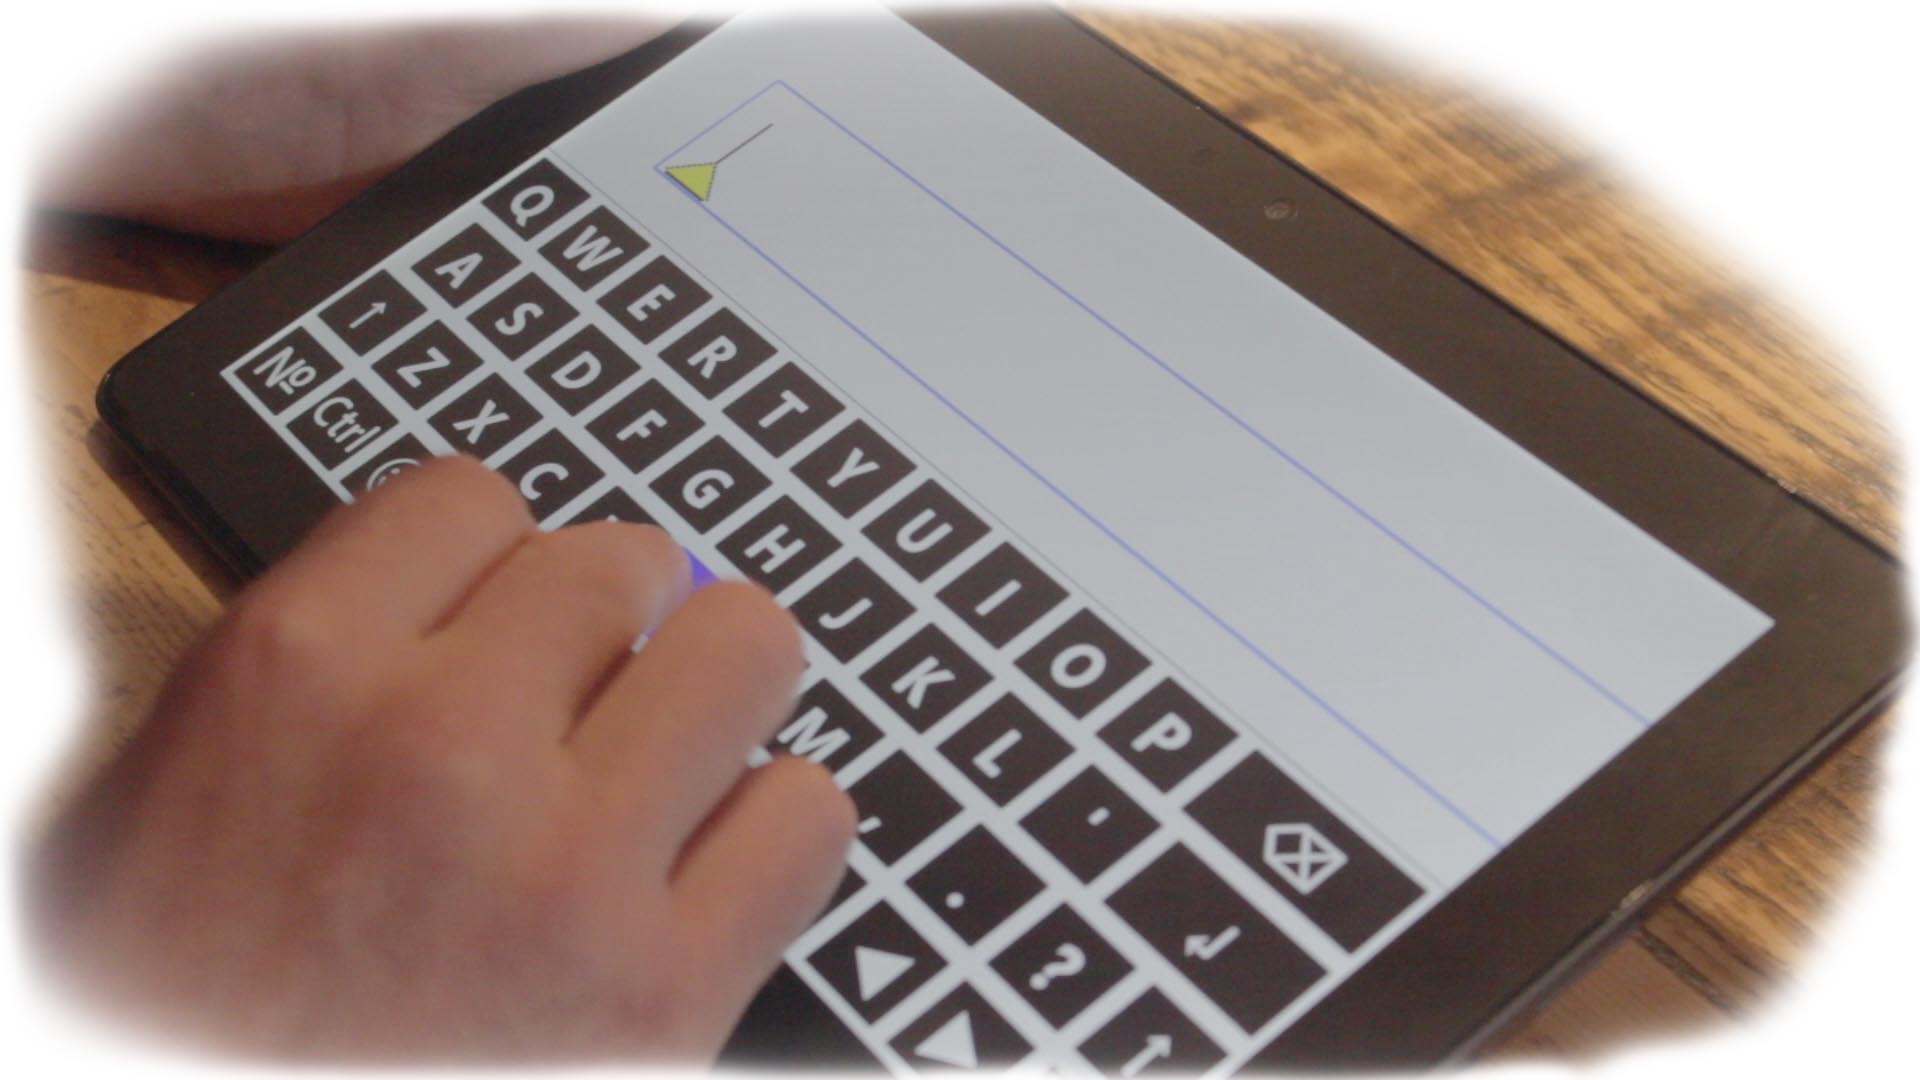 SuperNova's onscreen keyboard on a Windows tablet